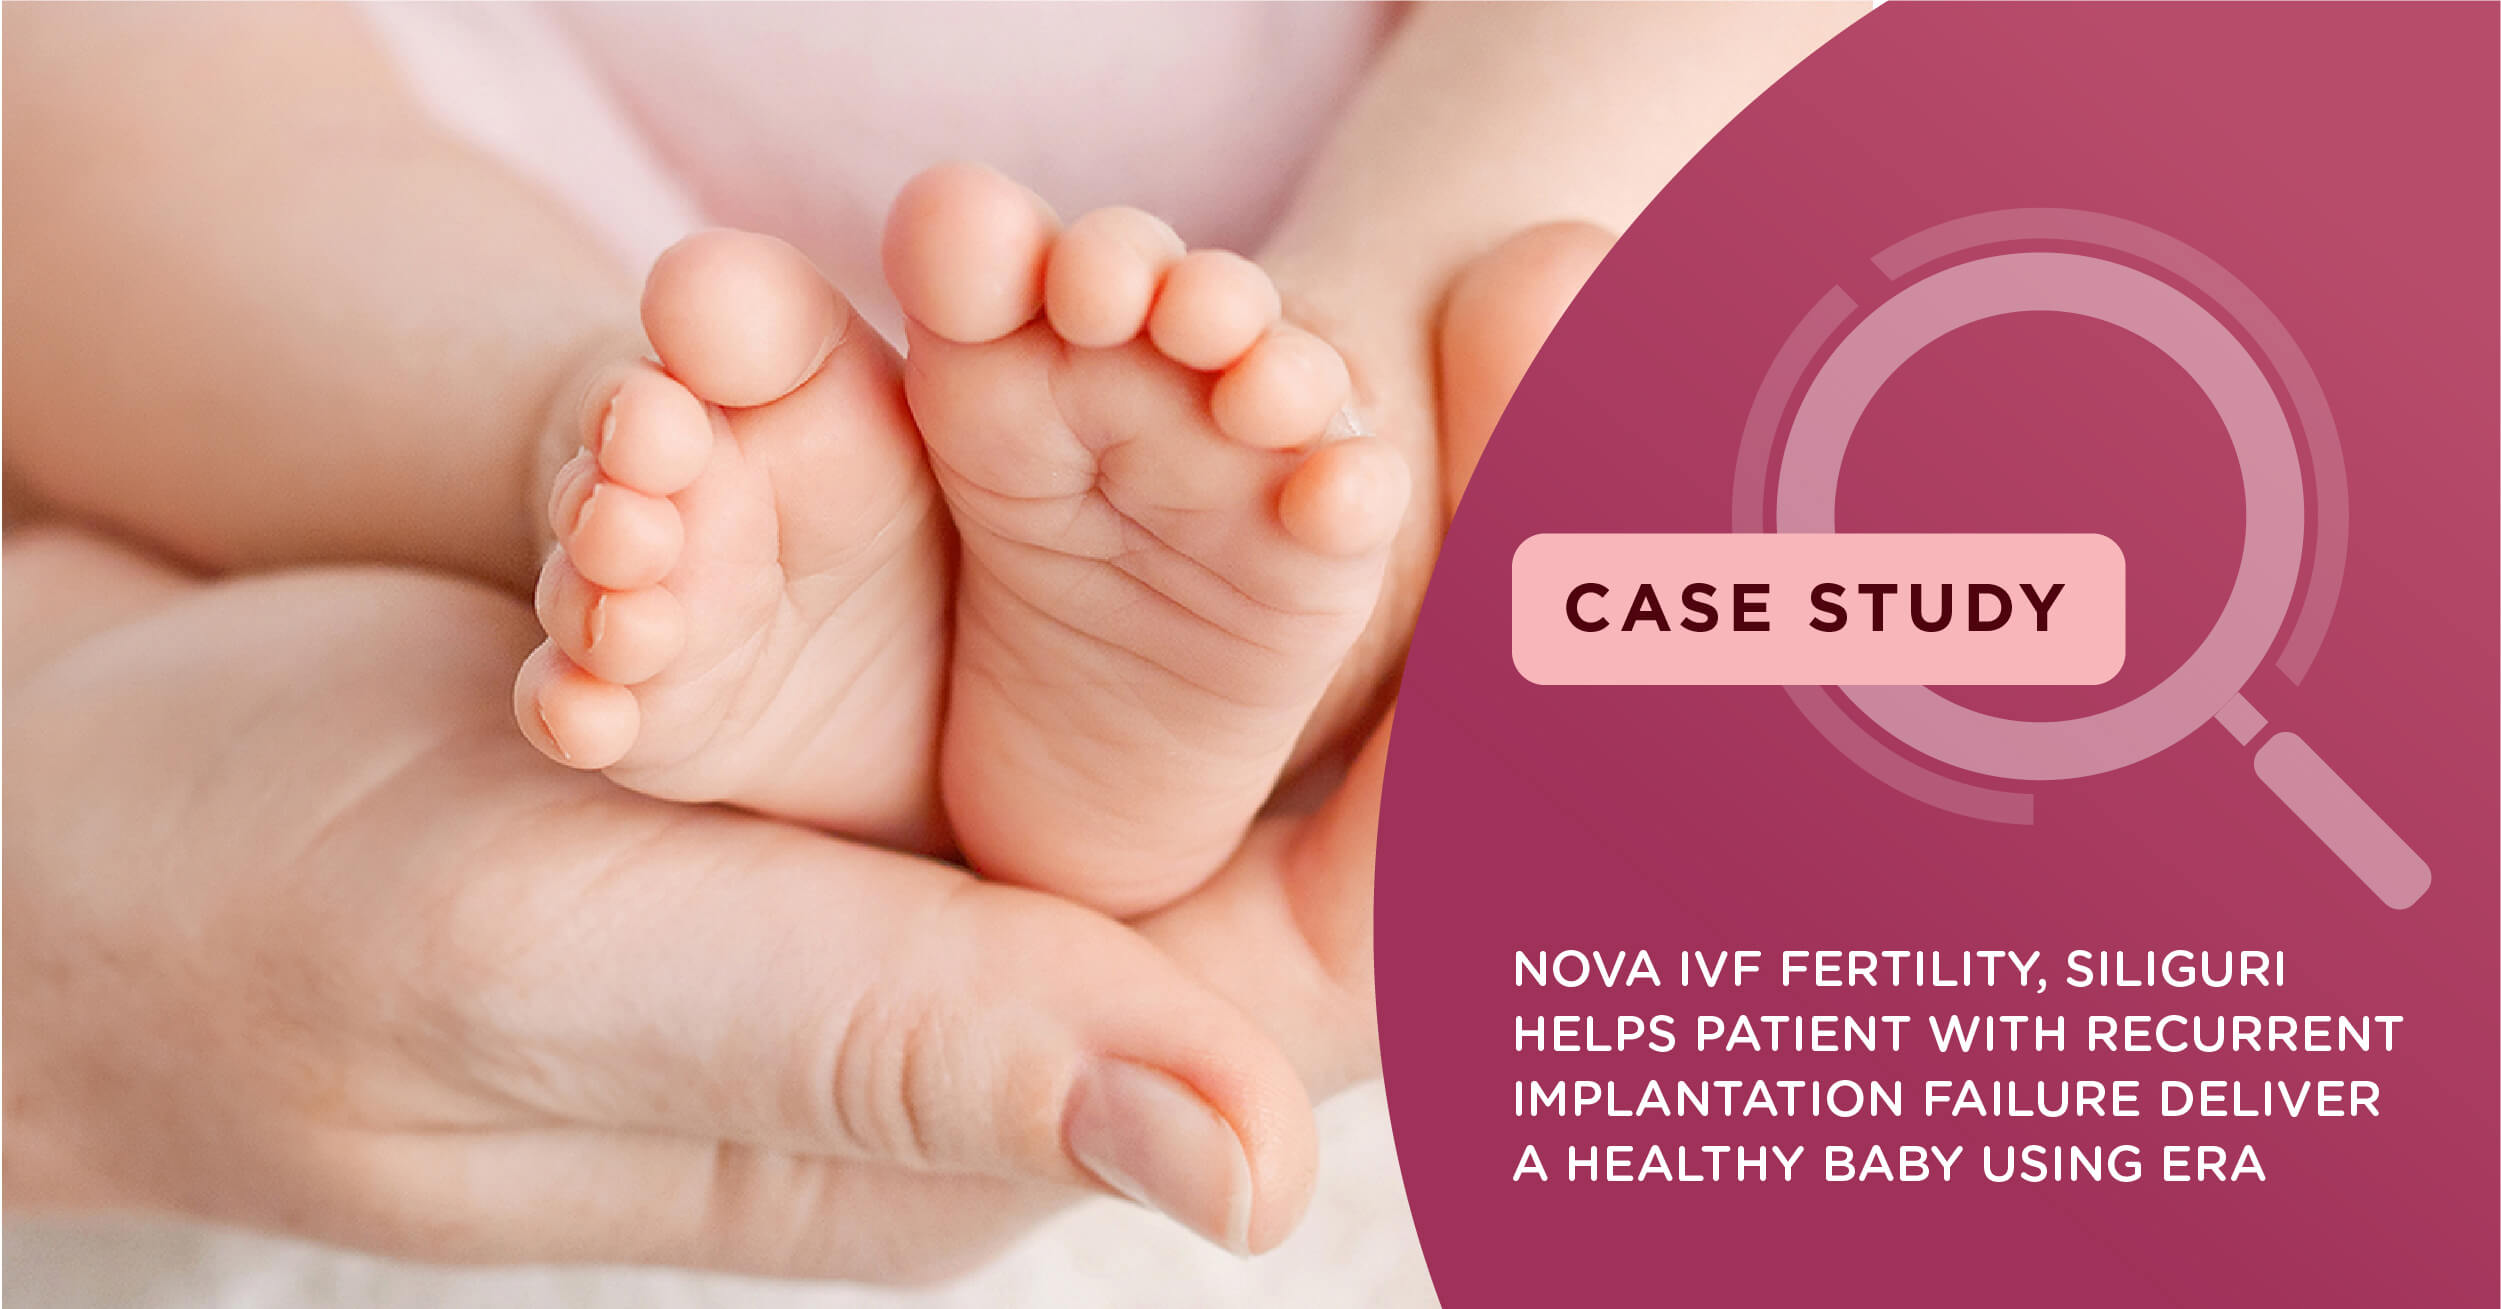 Nova IVF Fertility, Siliguri, West Bengal, helps patient with Recurrent Implantation Failure deliver a healthy baby using Advanced Fertility Treatment – ERA